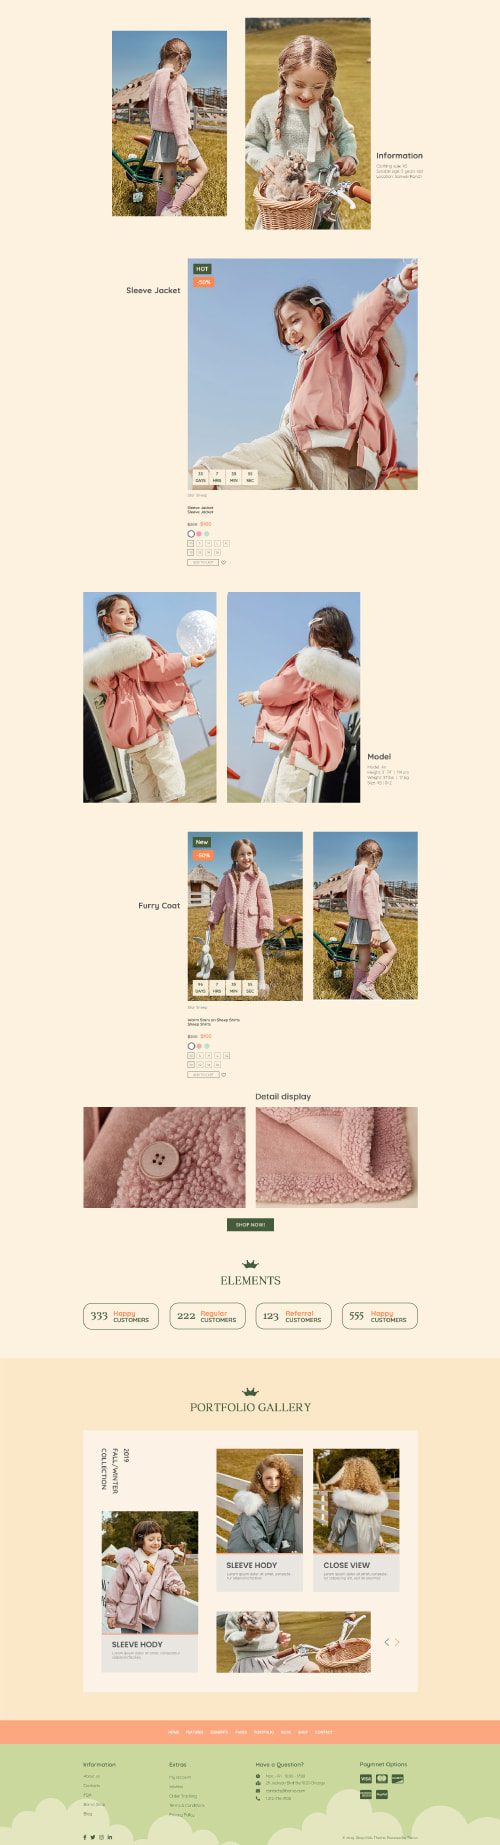 The JPcreative_Landing Page Design_Kid Clothing